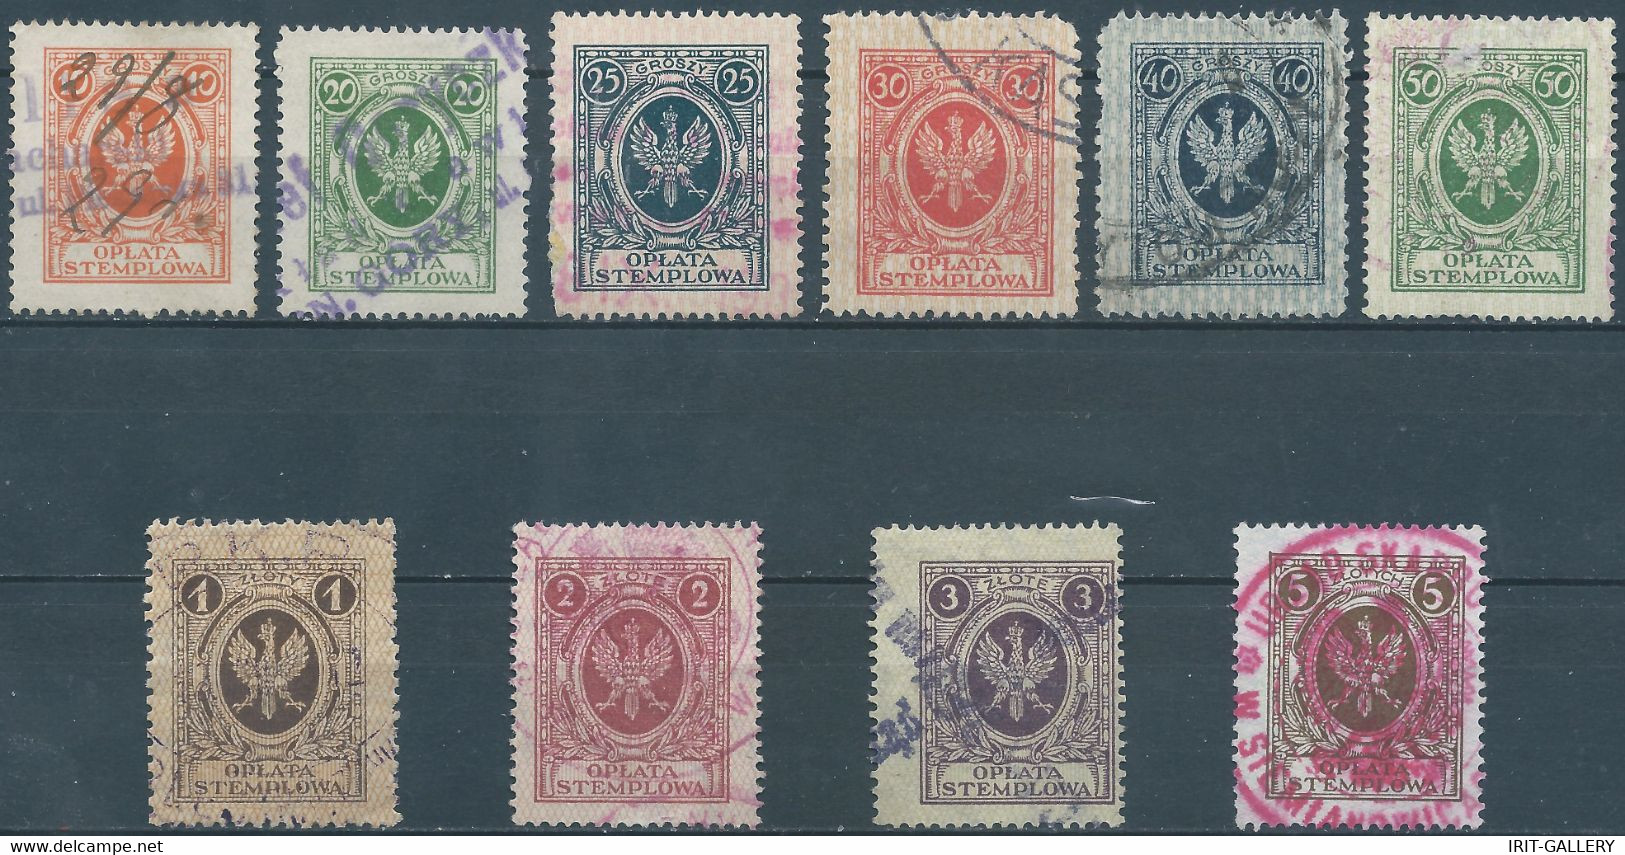 POLONIA-POLAND-POLSKA,Revenue Stamps Fiscal Tax 1925-1929 (OPLATA STEMPLOWA)Used - Revenue Stamps